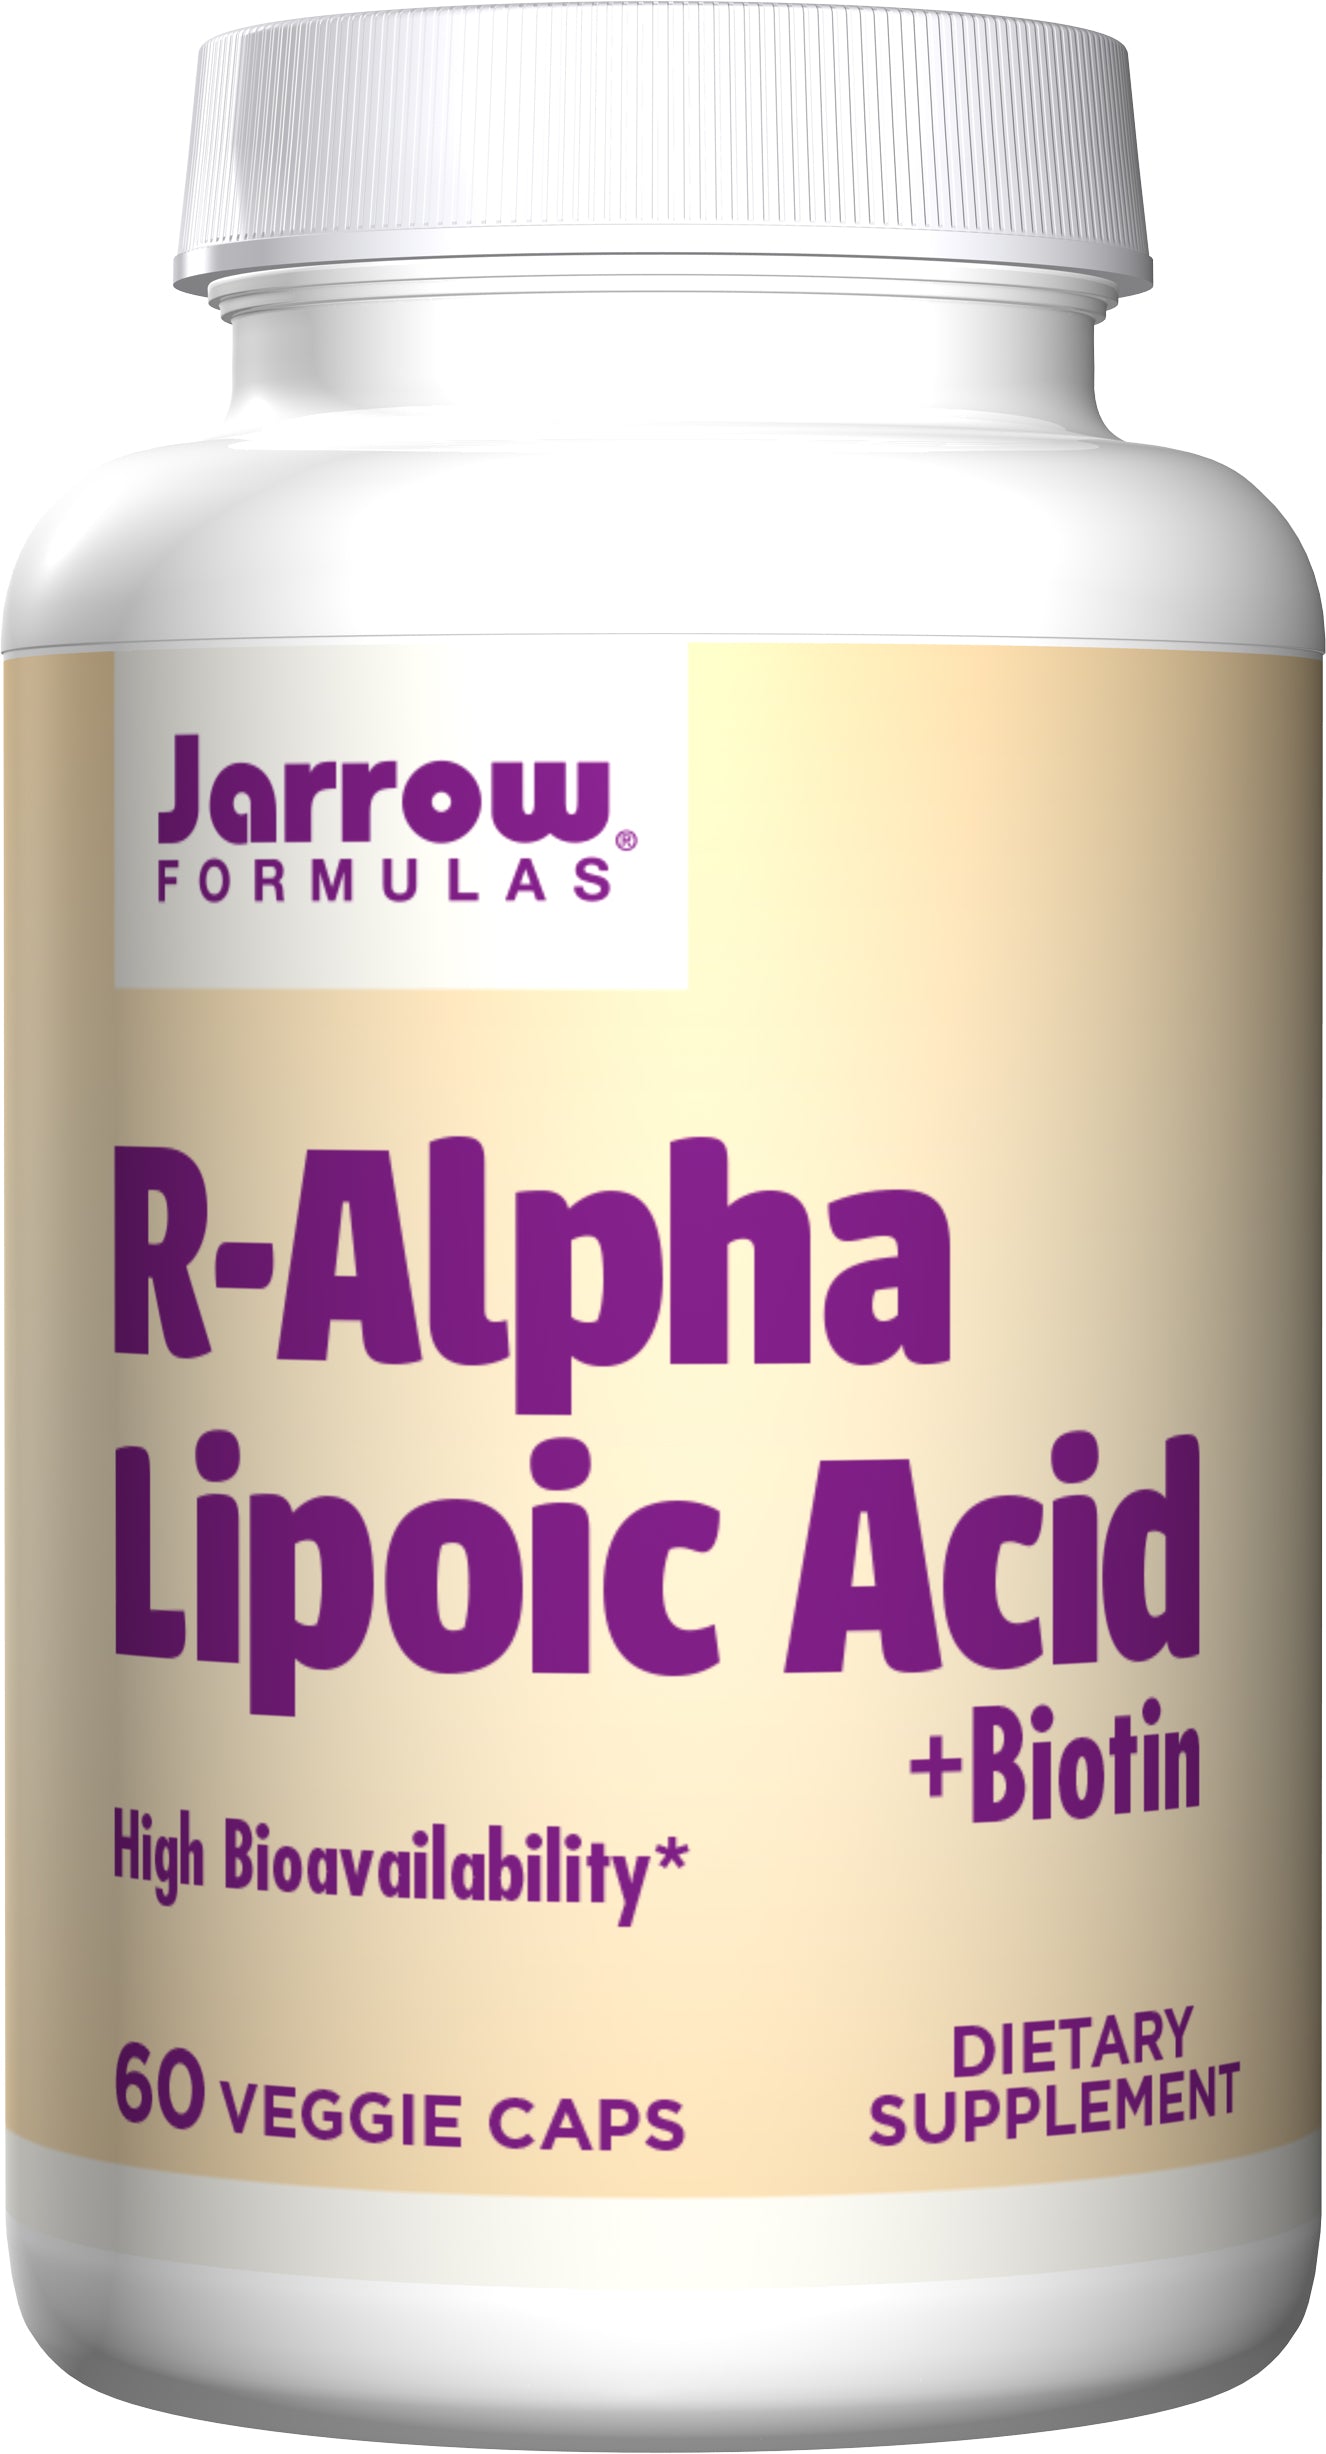 https://jarrowrussia.ru/catalog/jarrow-formulas-r-alpha-lipoic-acid-biotin-60